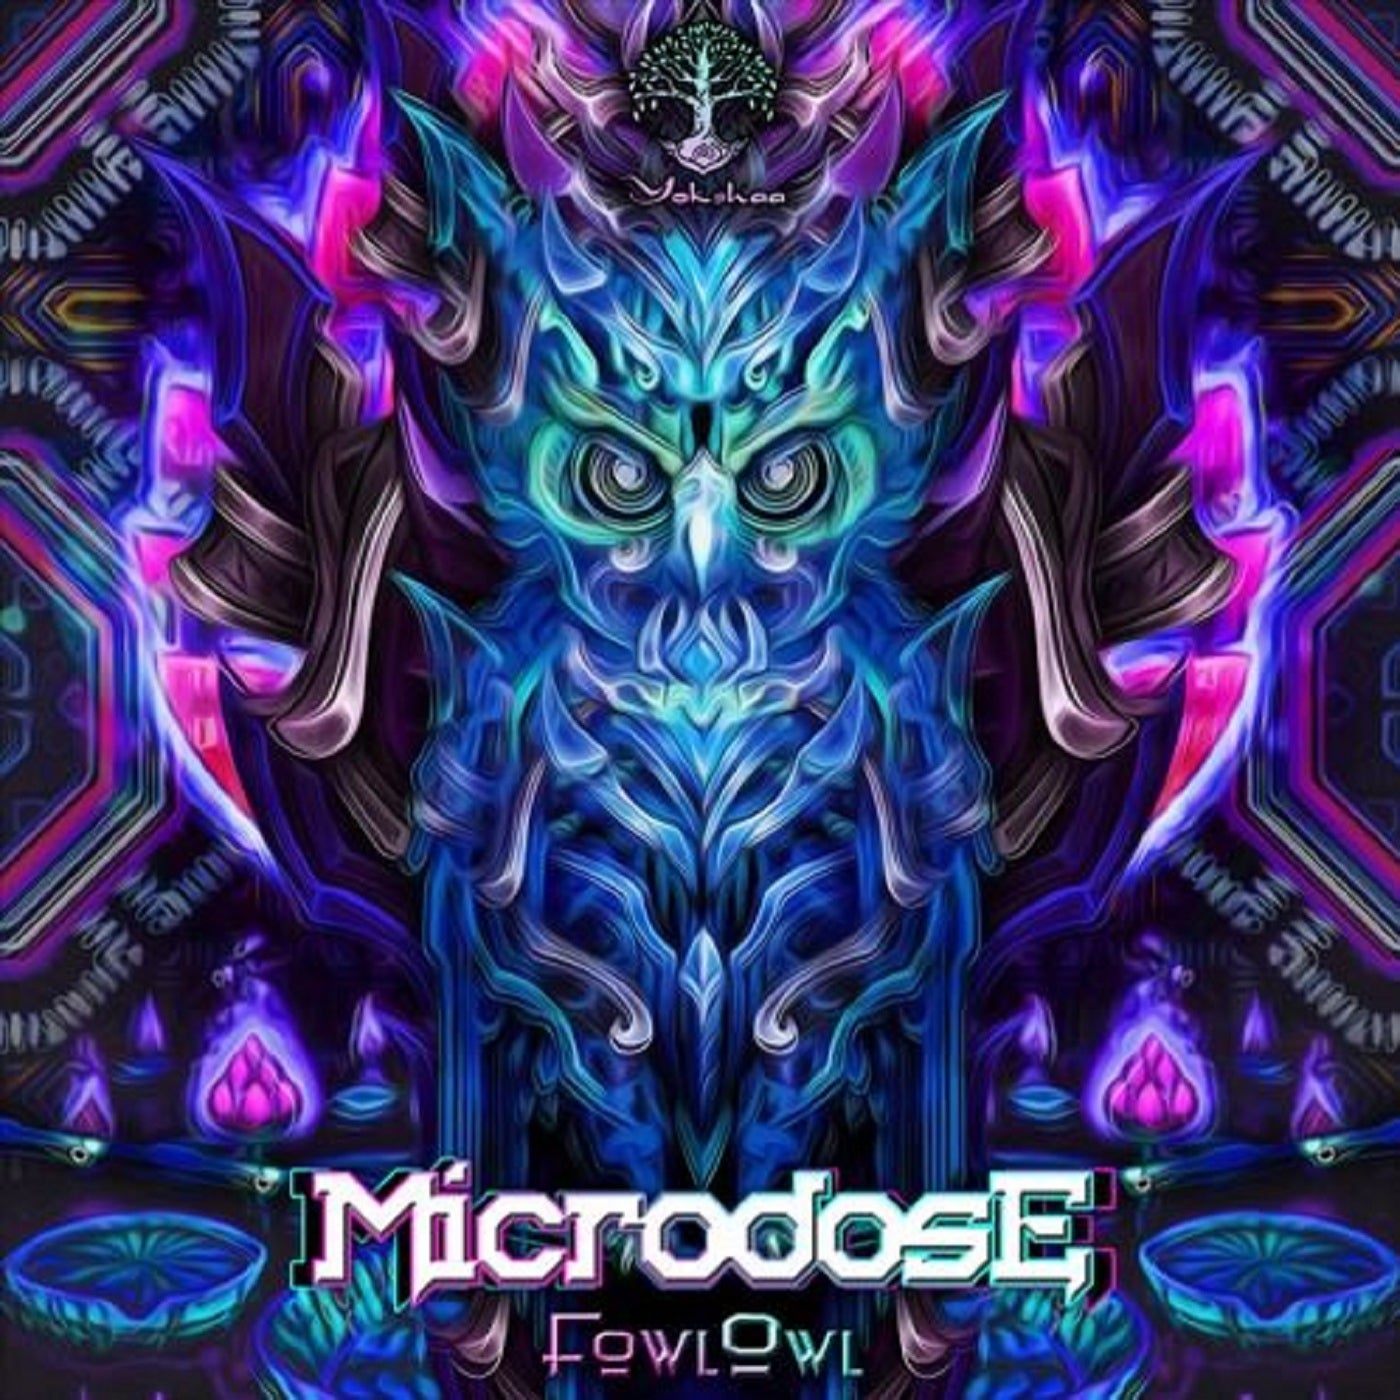 Microdose